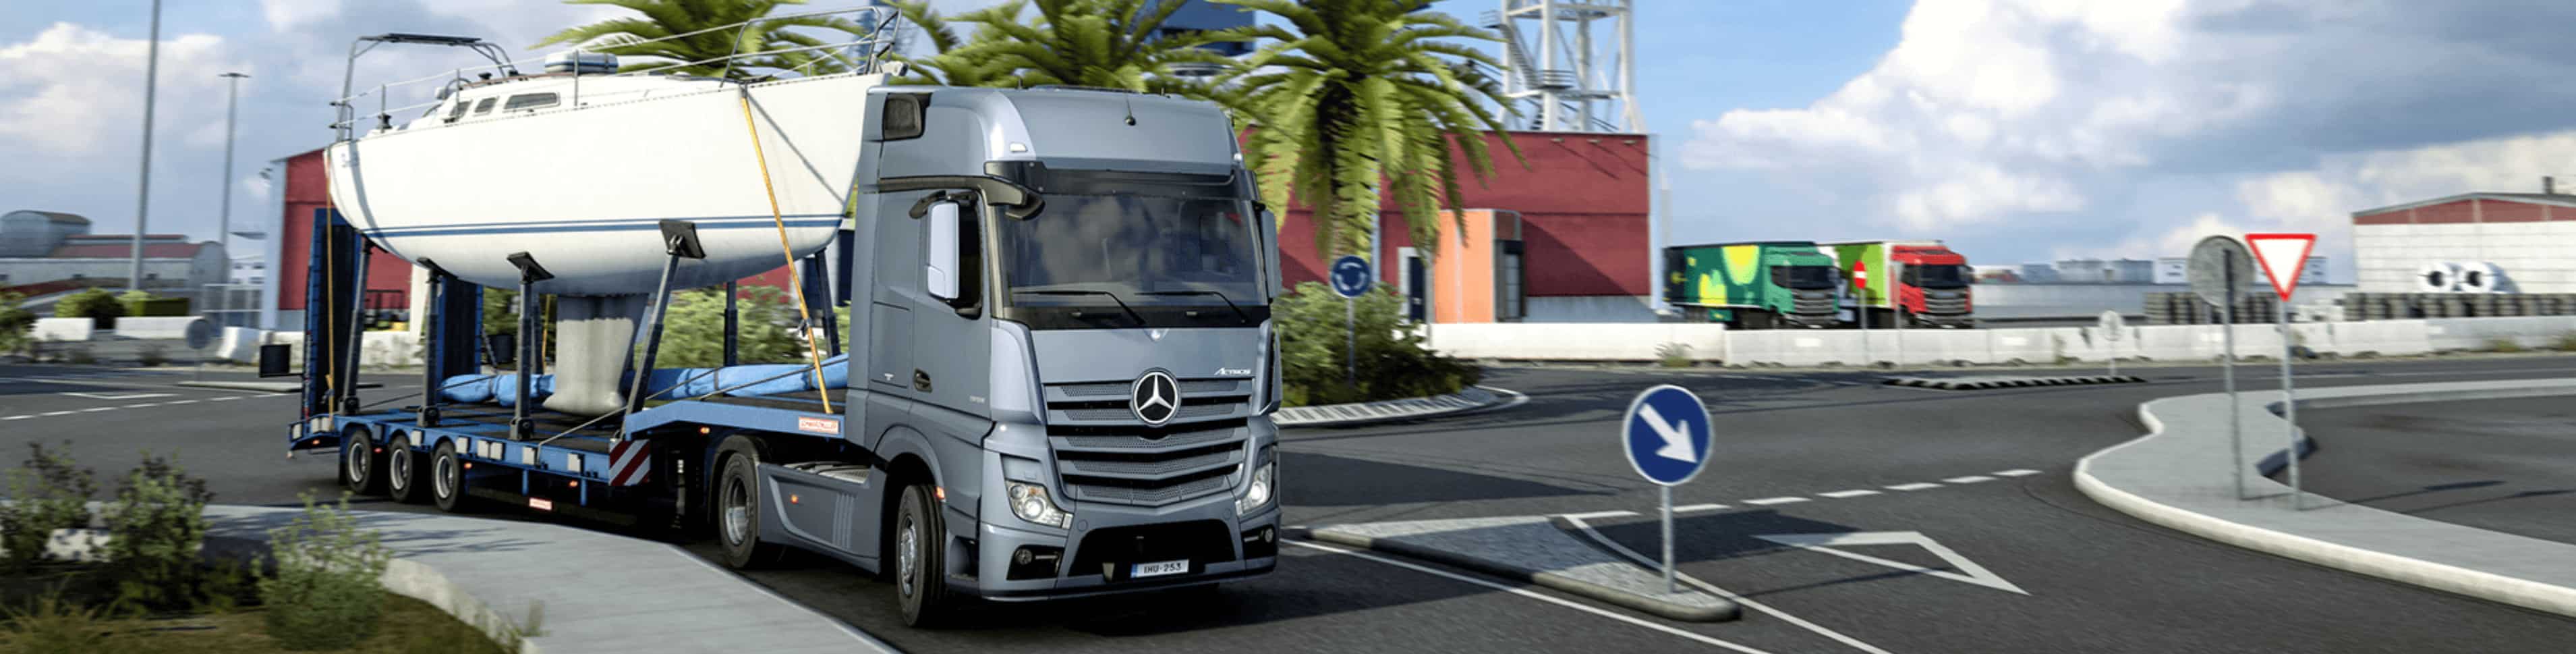 https://www.ets2modding.com/wp-content/uploads/2021/10/Euro-Truck-Simulator-2-System-Requirements.jpg